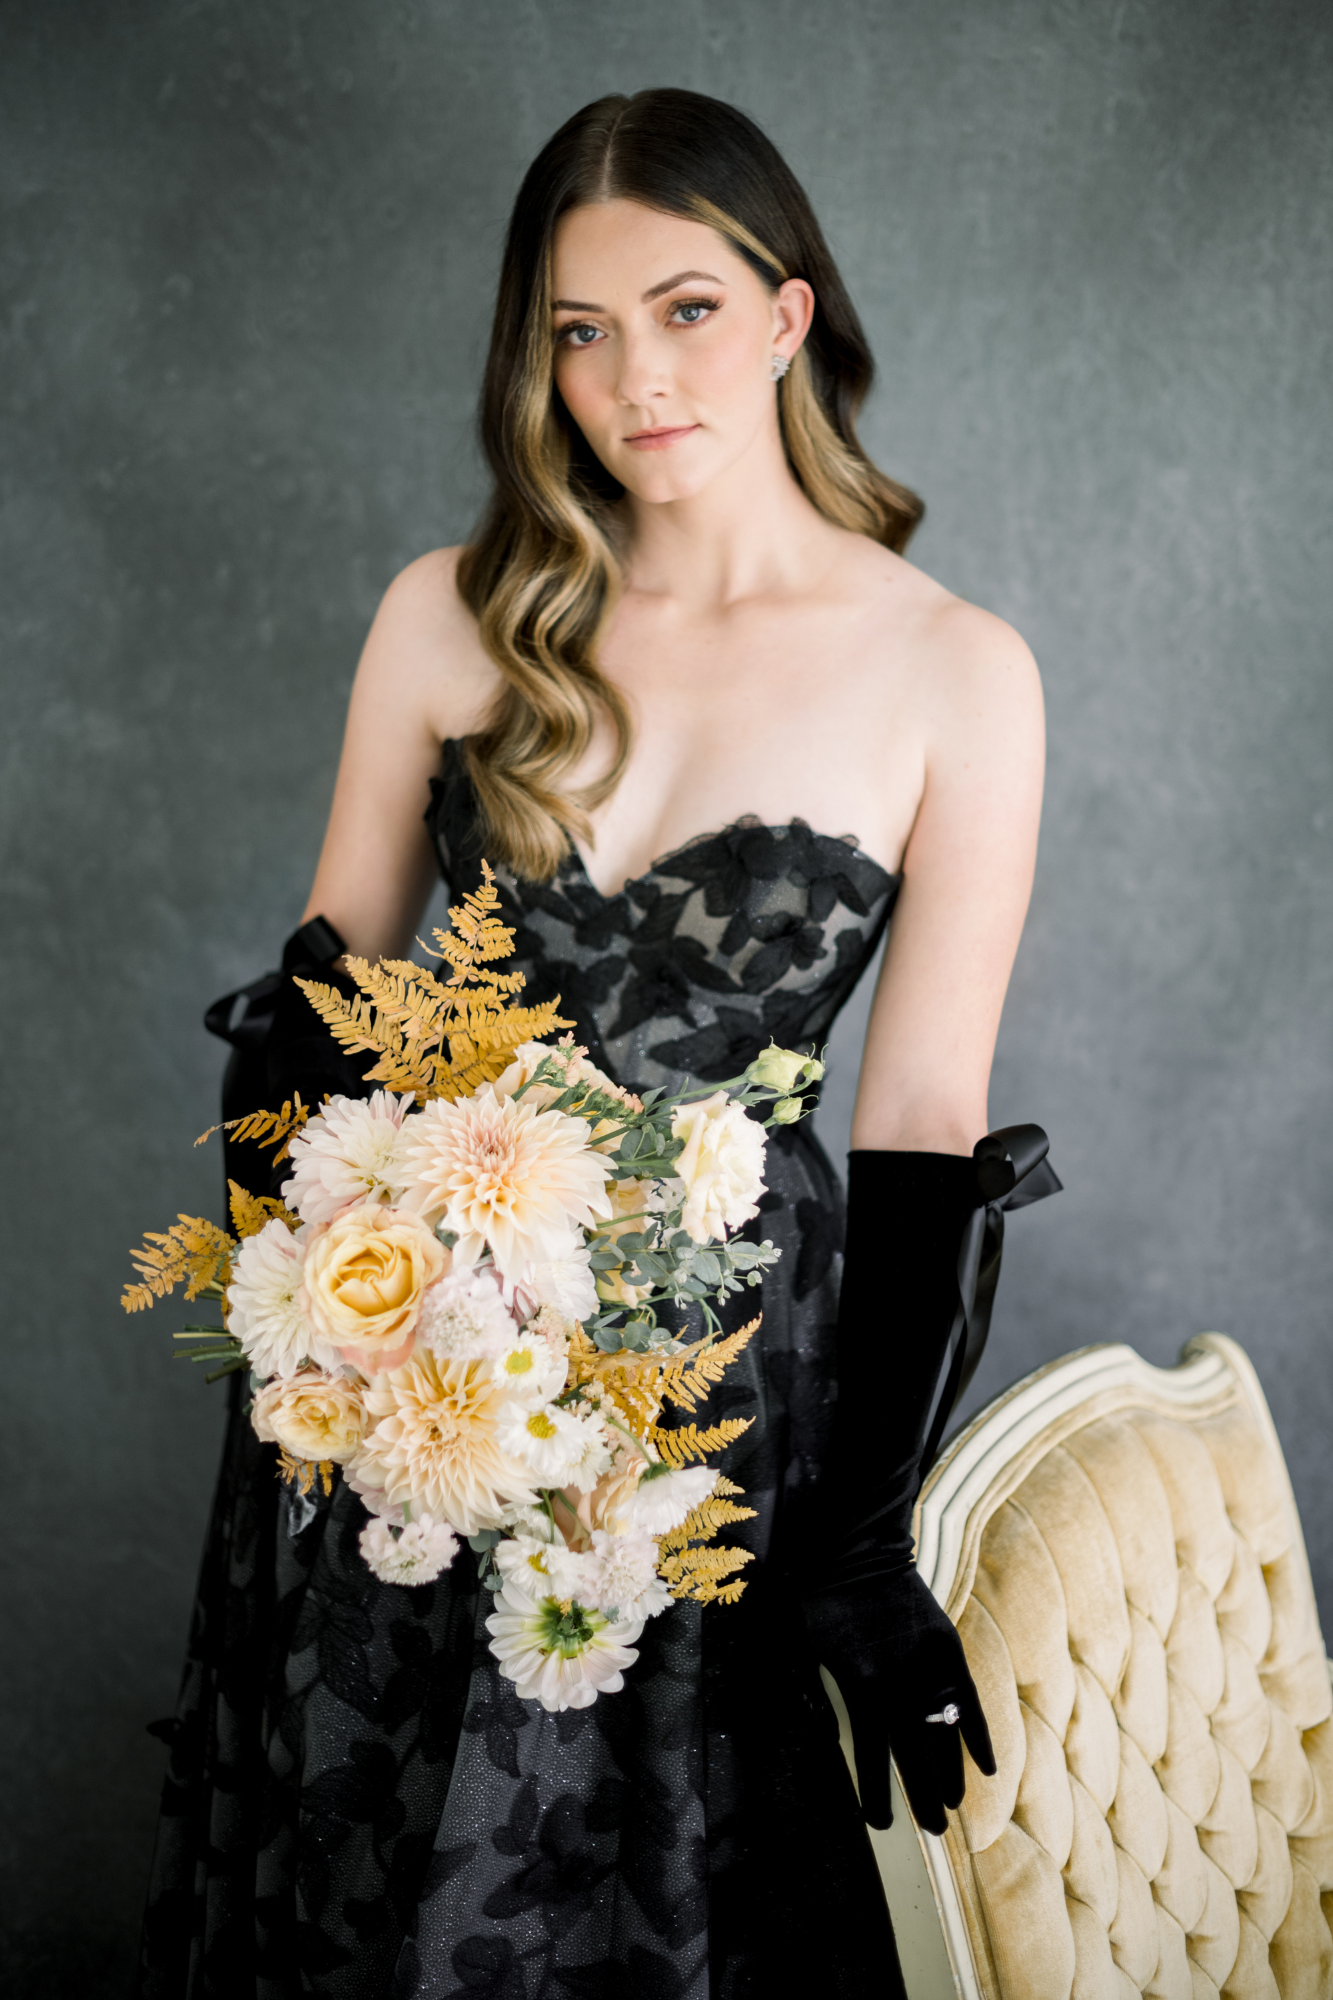 Model wears black wedding dress in a magazine photoshoot.